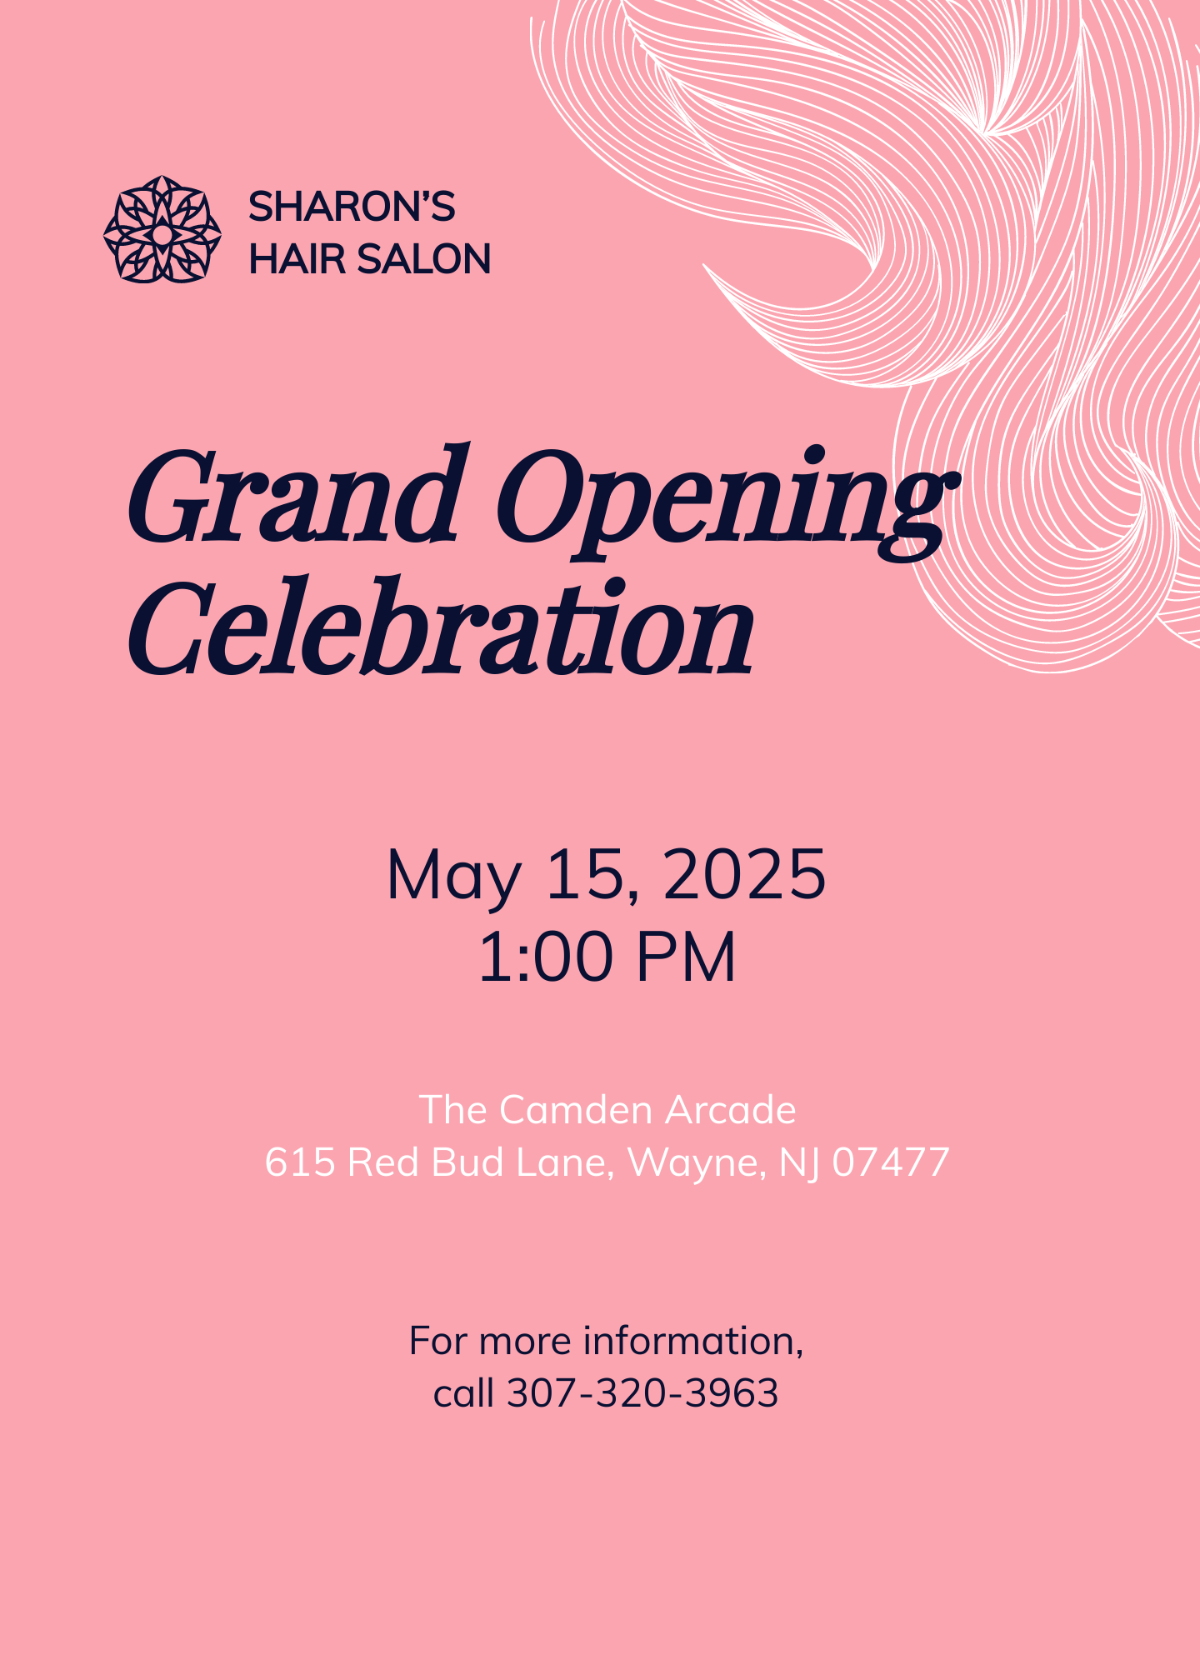 Hair Salon Grand Opening Invitation Template